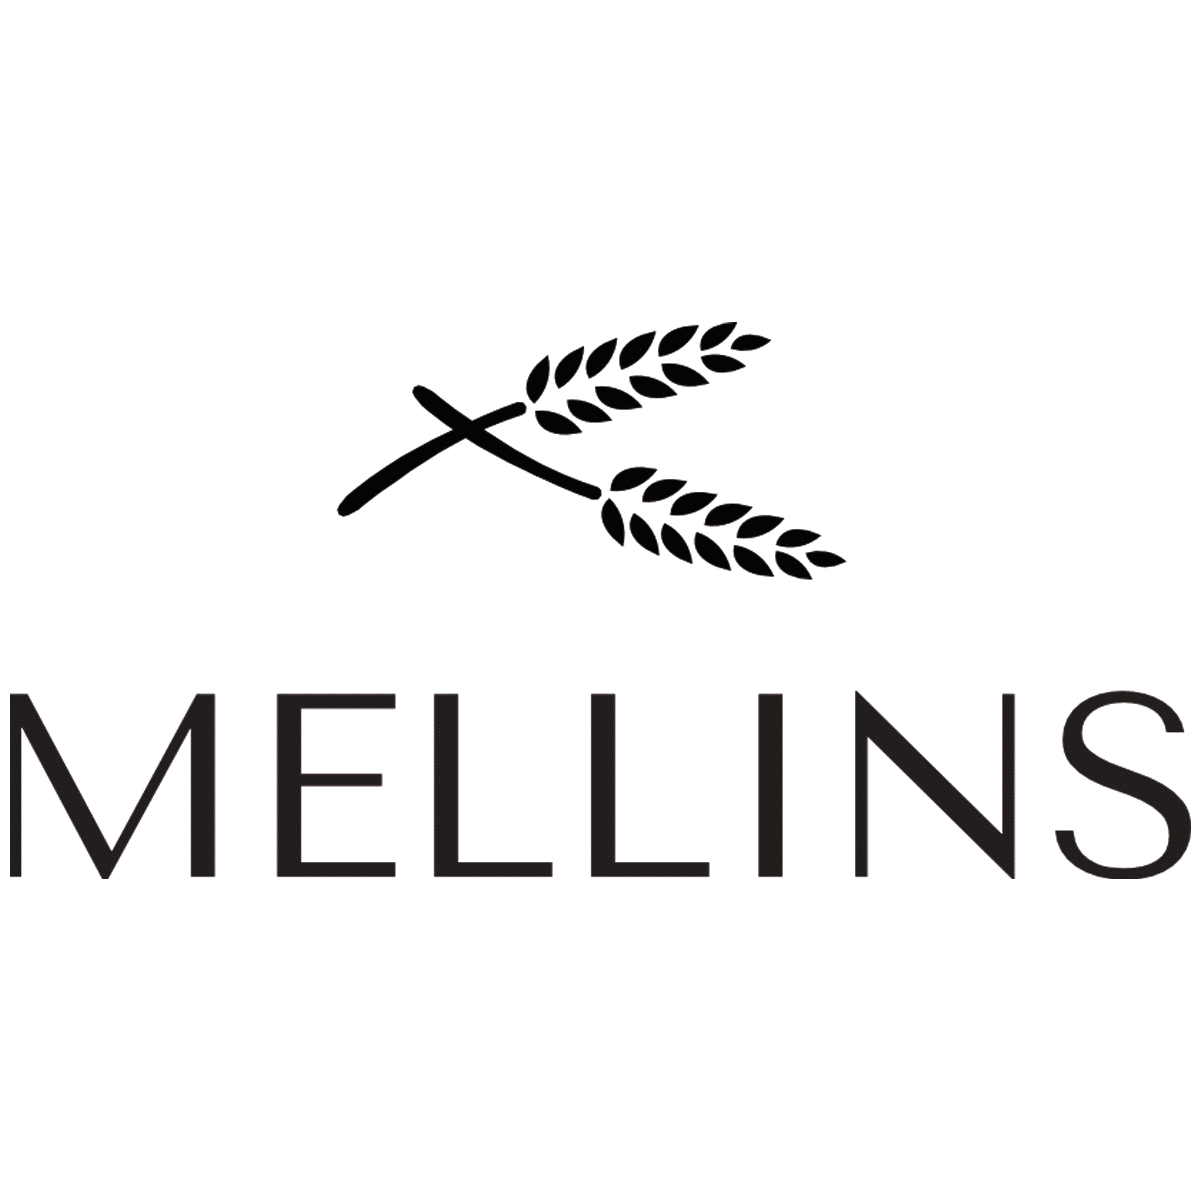 MELLINS